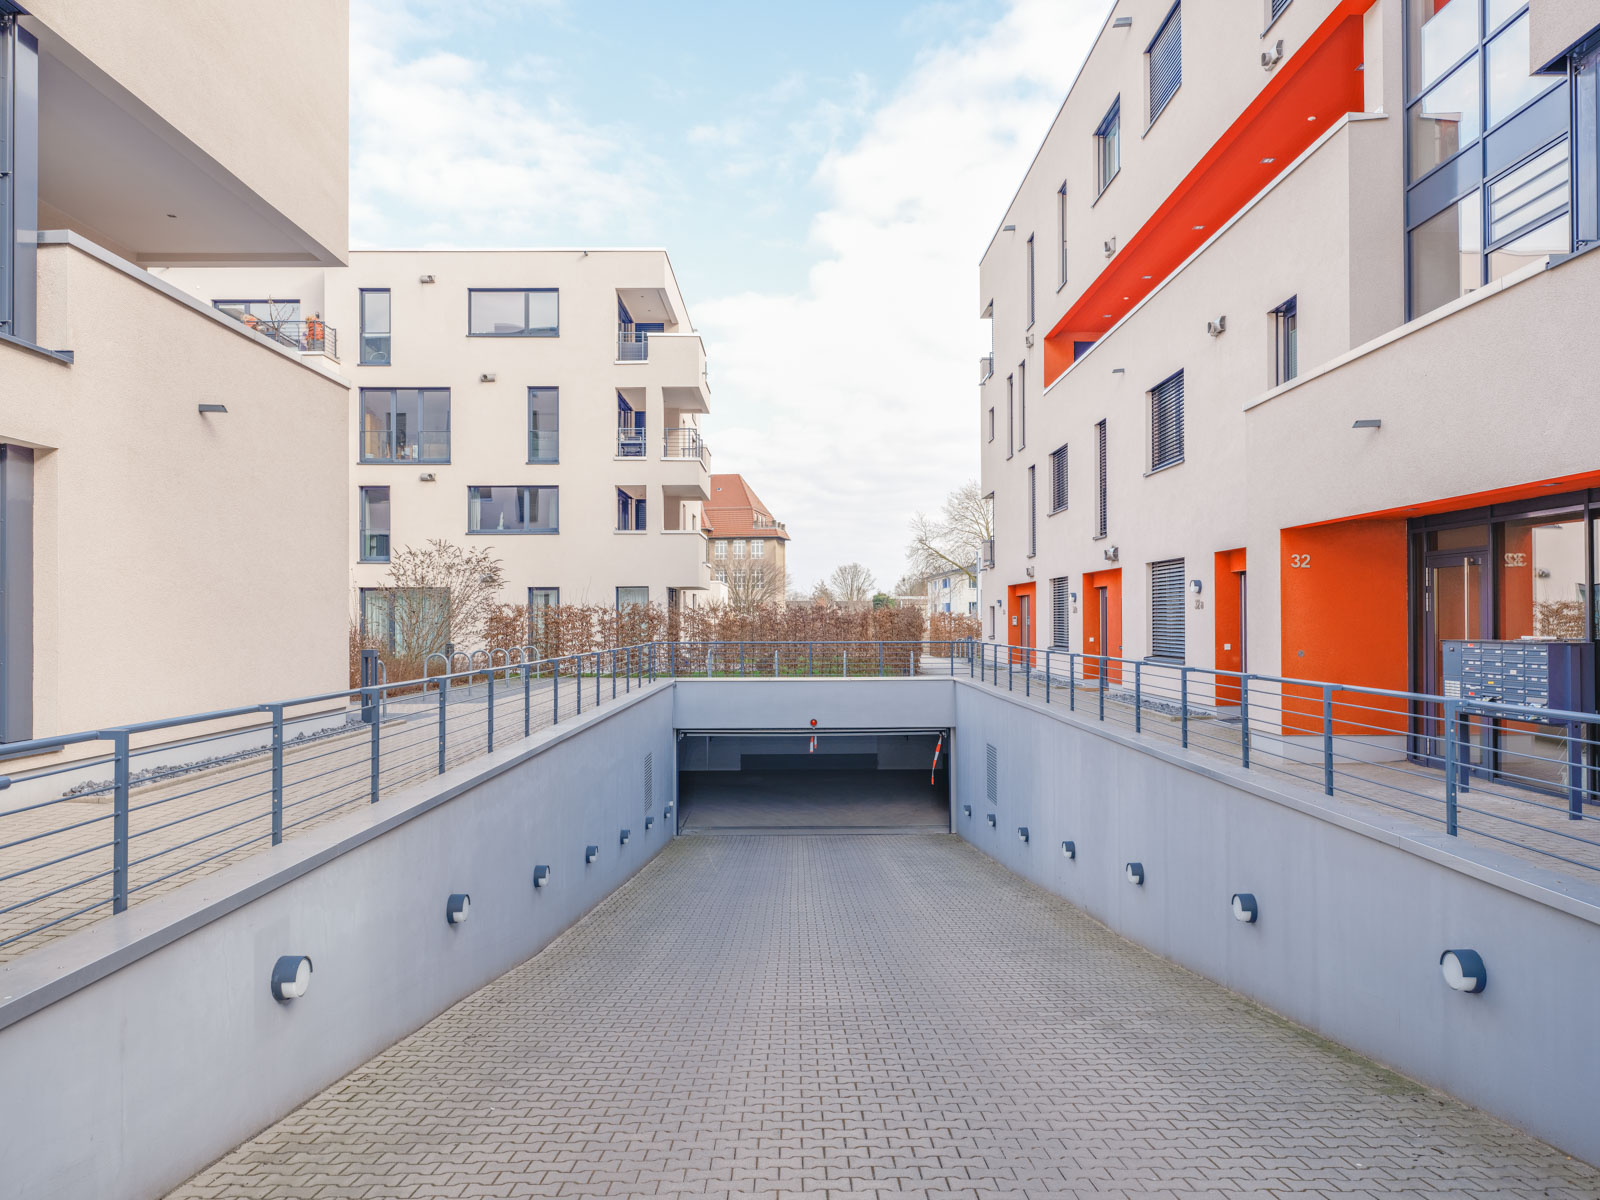 New housing estate with garage entrance on 'Walther-Rathenau-Straße' in March 2021 (Bielefeld, Germany).